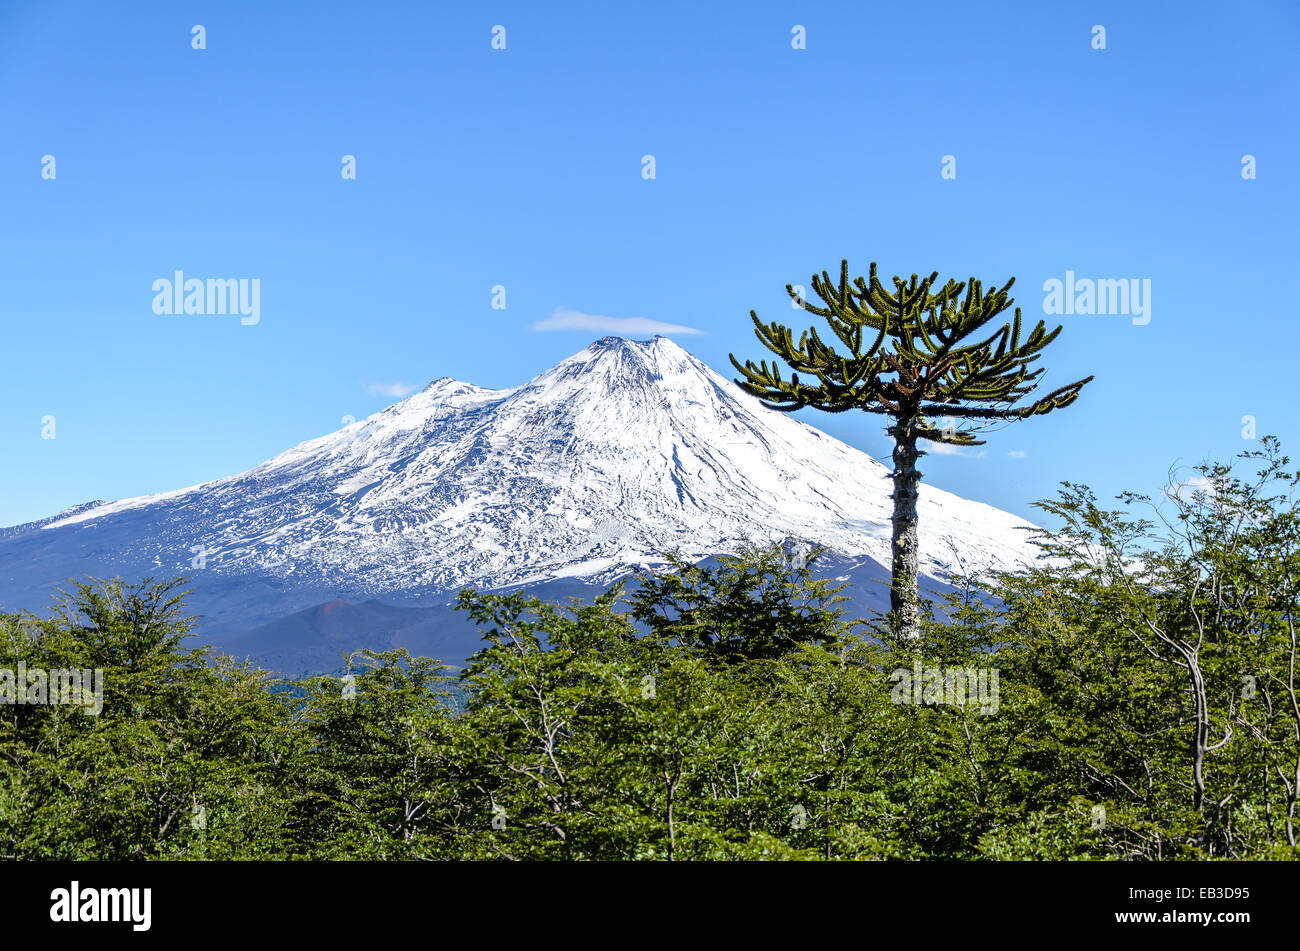 Chile, Araucania region, Conguillo national park, Llaima volcano Stock Photo